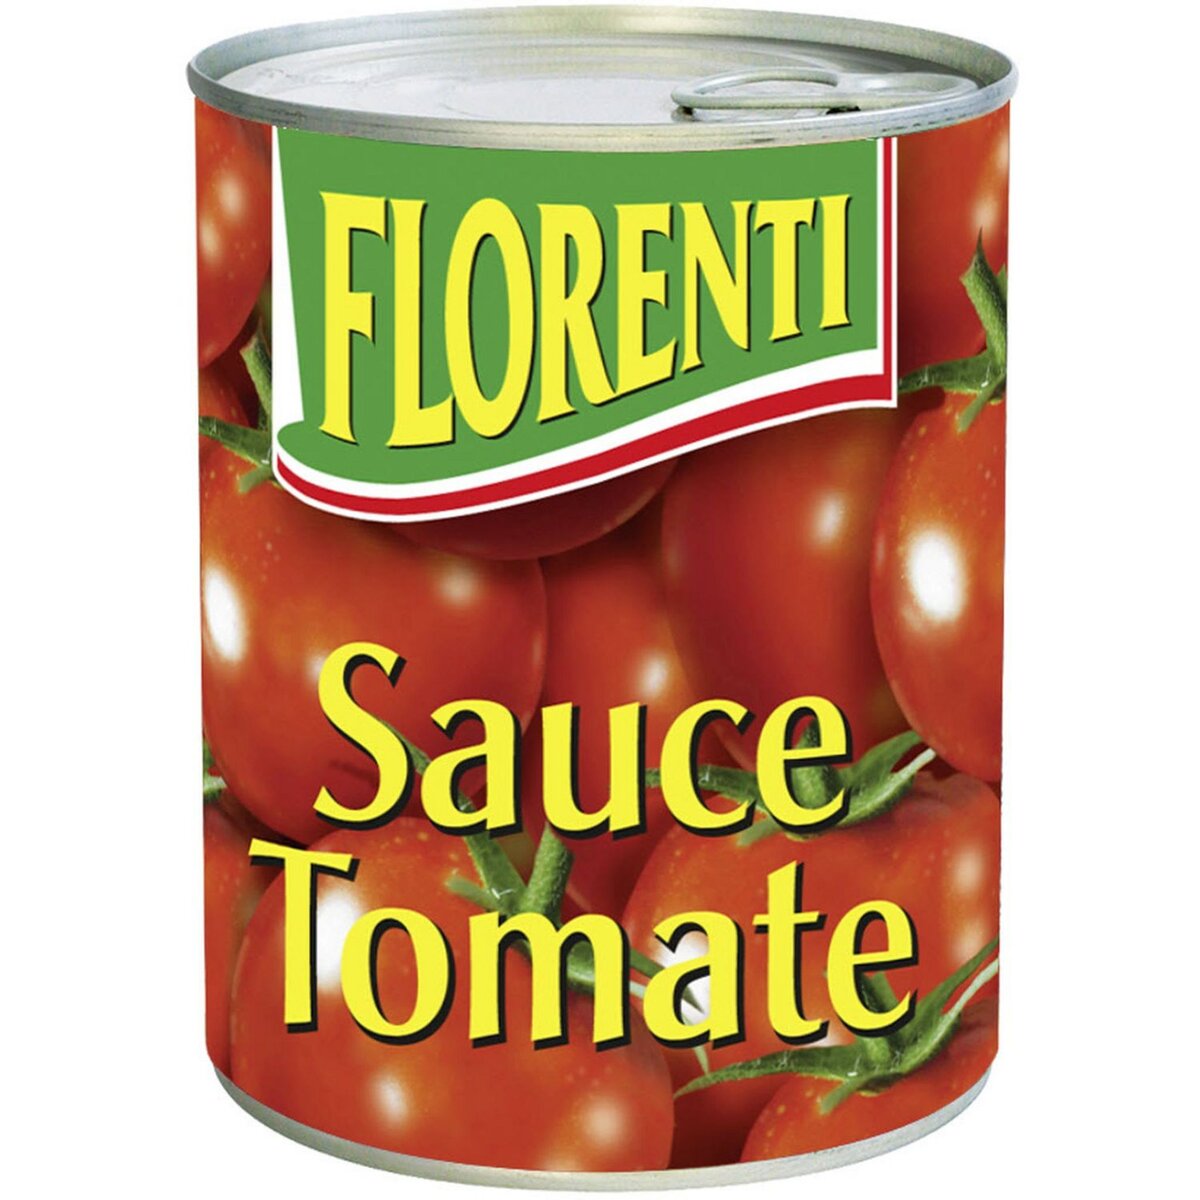 FLORENTI Sauce tomate 190g